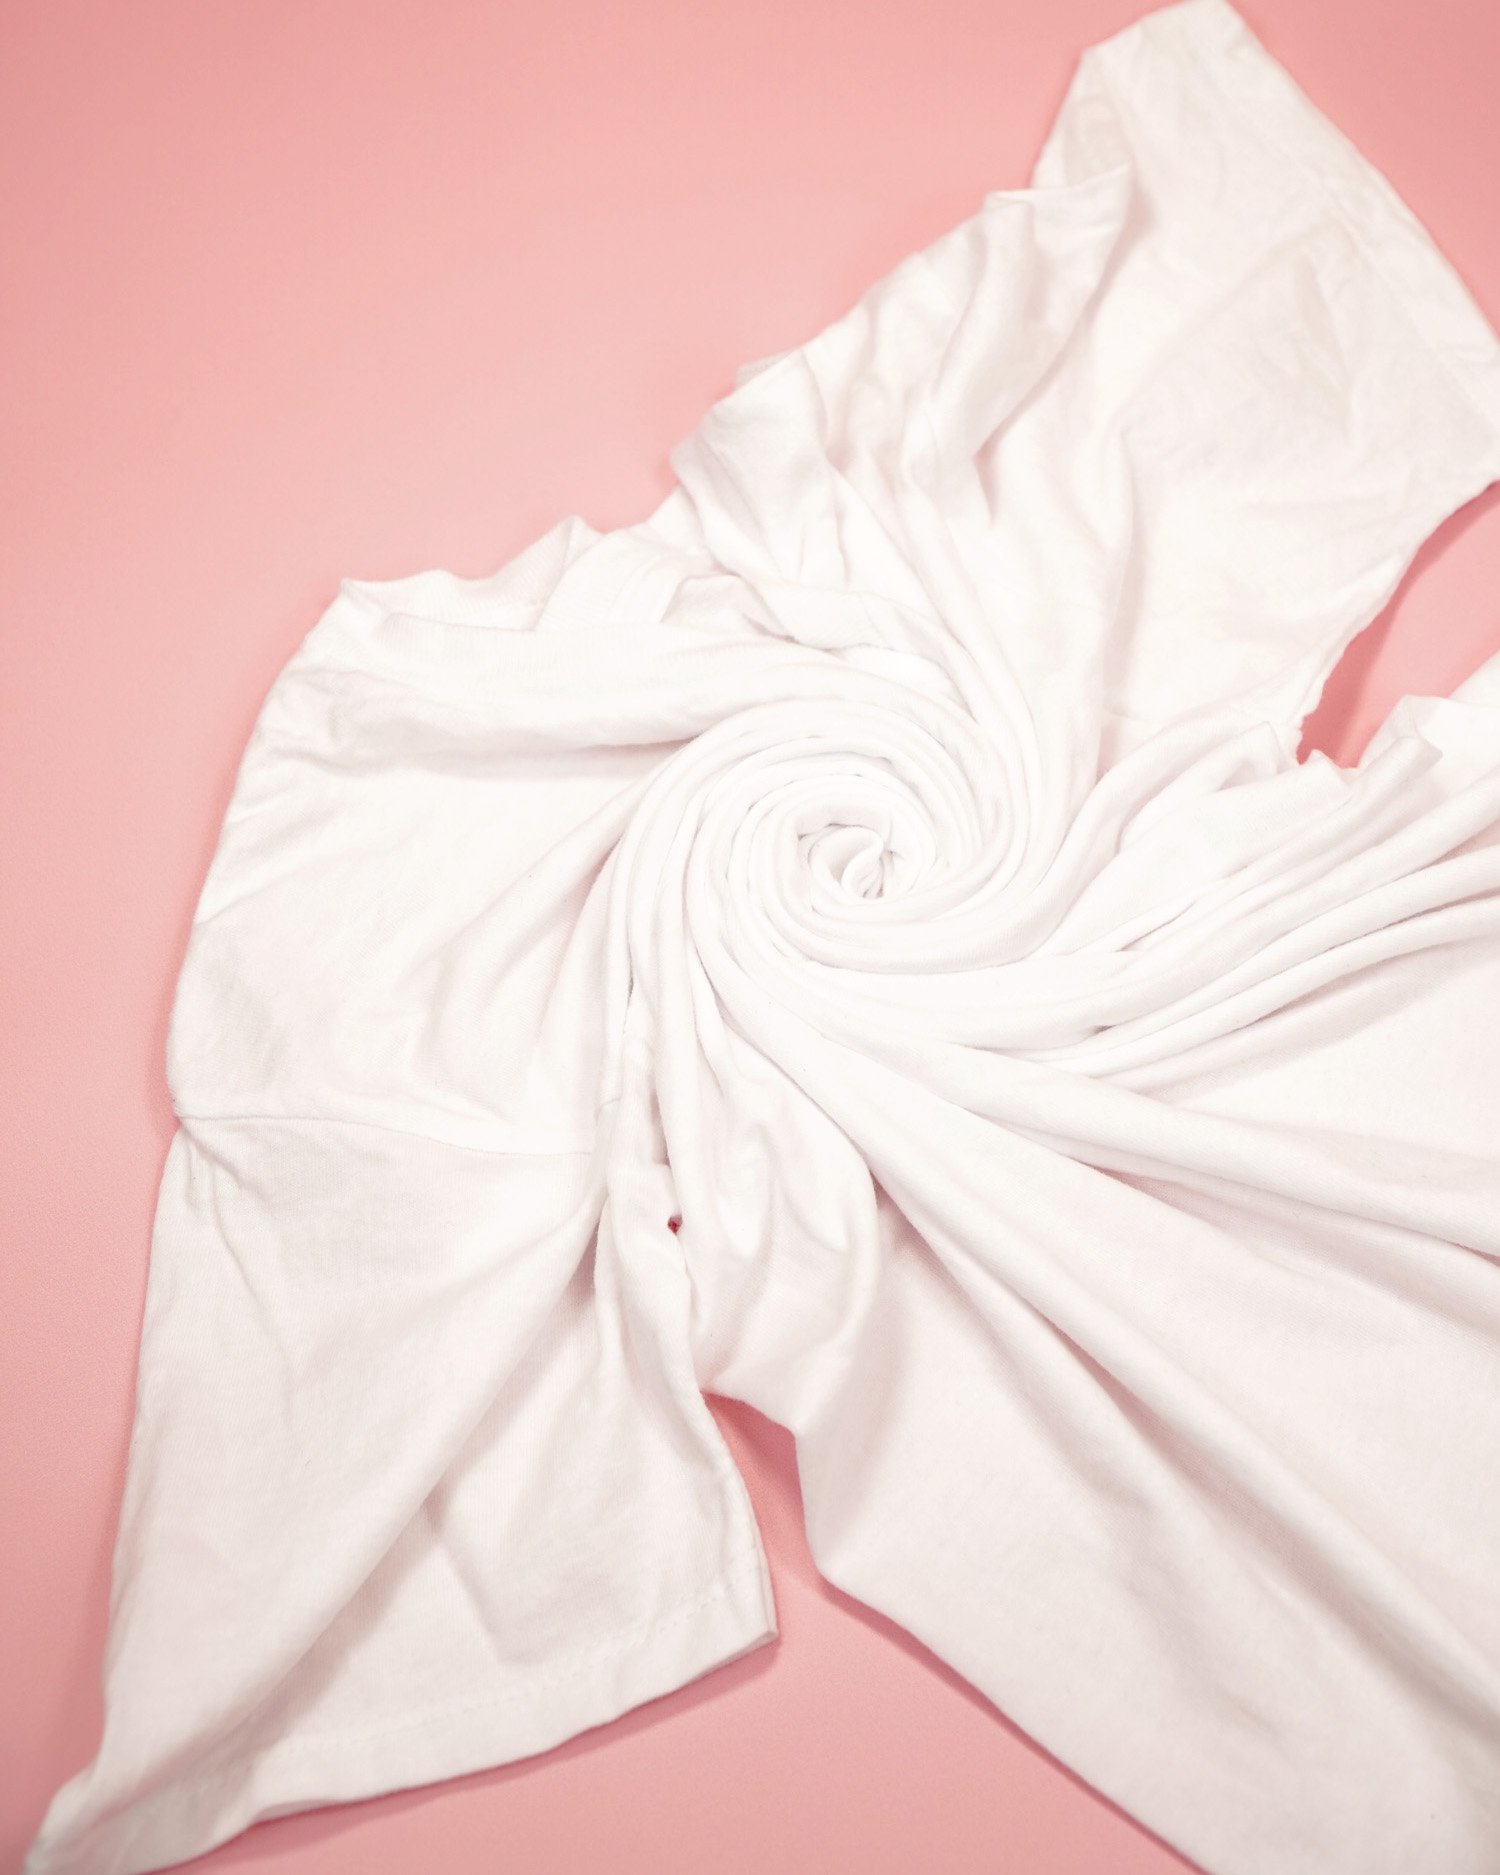 close up of spiral tie-dye folding on white shirt